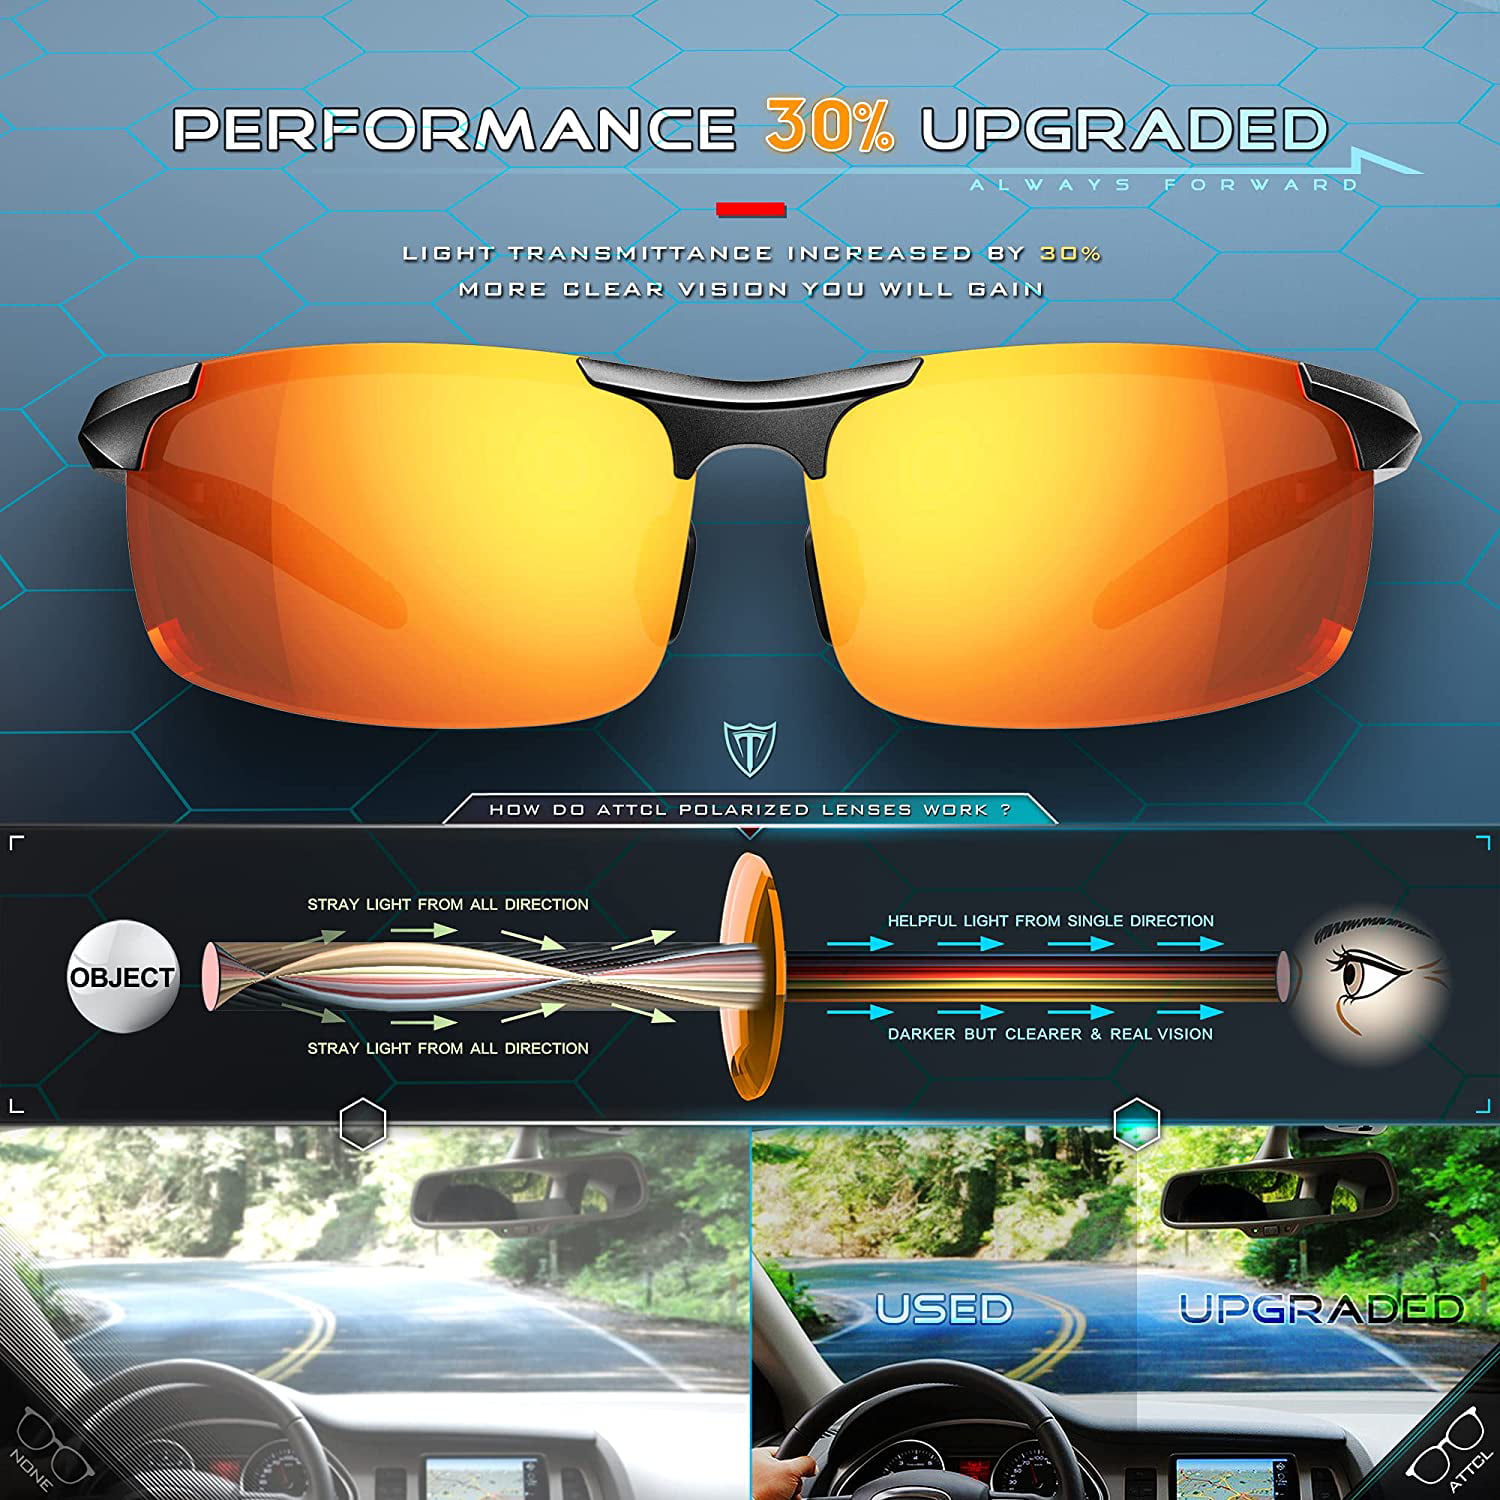 ATTCL Mens Sports Driving Polarized Sunglasses for Men Al-mg metal